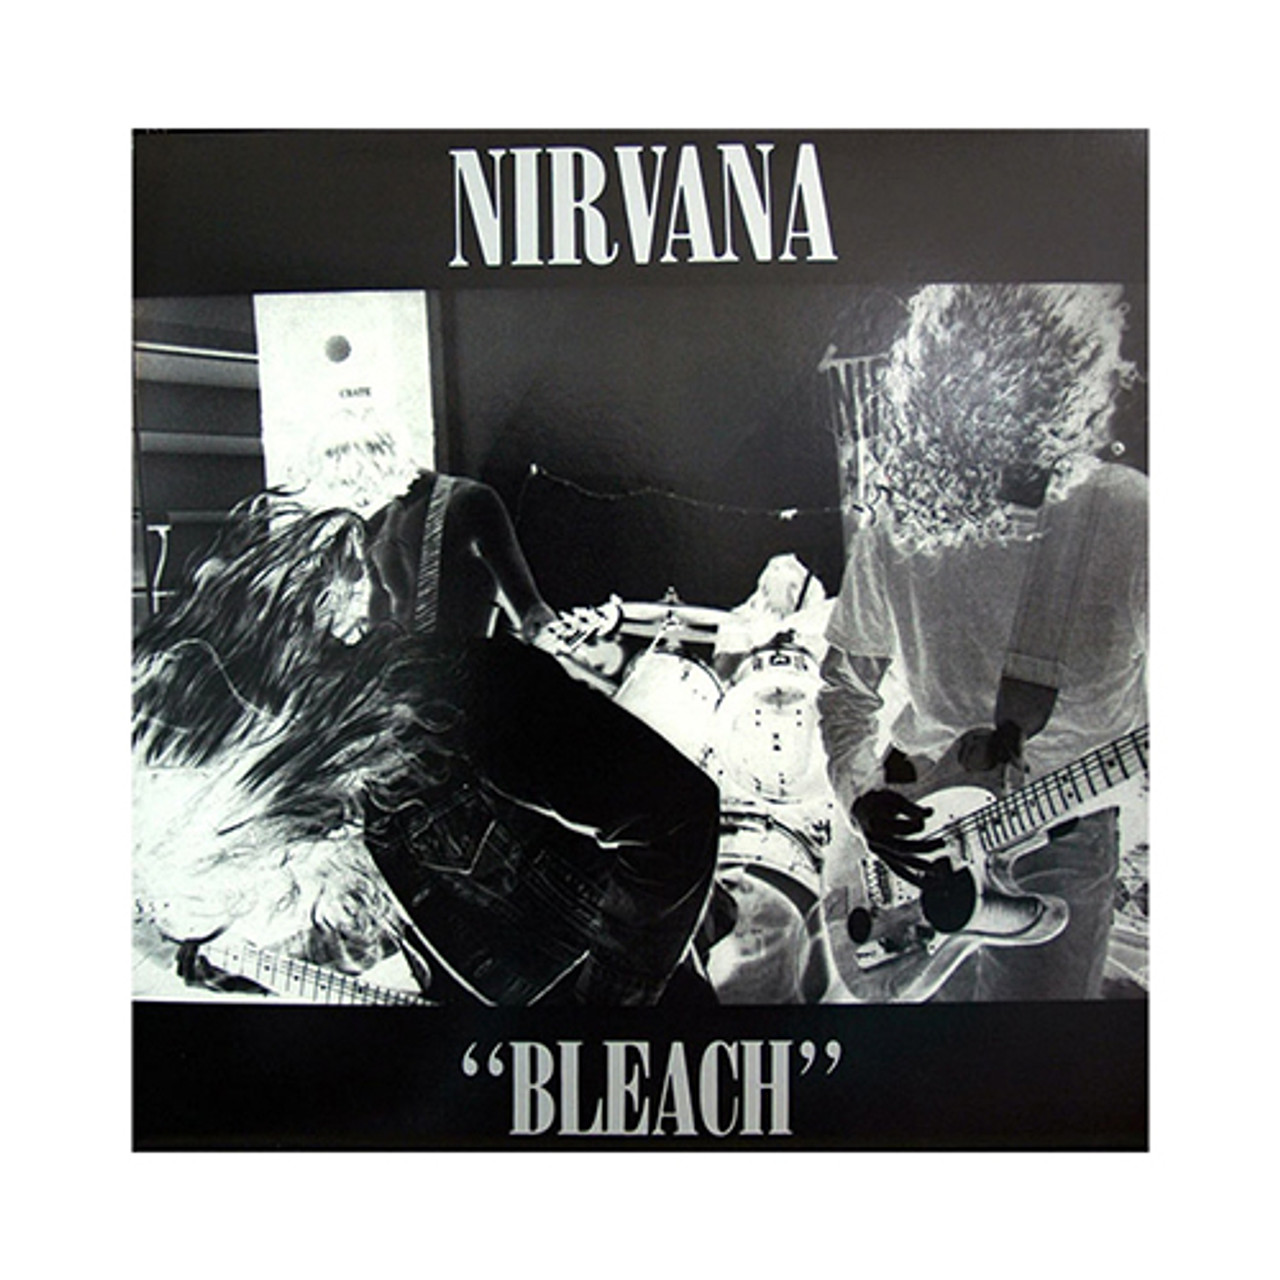 Buy Nirvana Vinyl Records: LPs, Box Set Vinyl & 7-Inch Singles